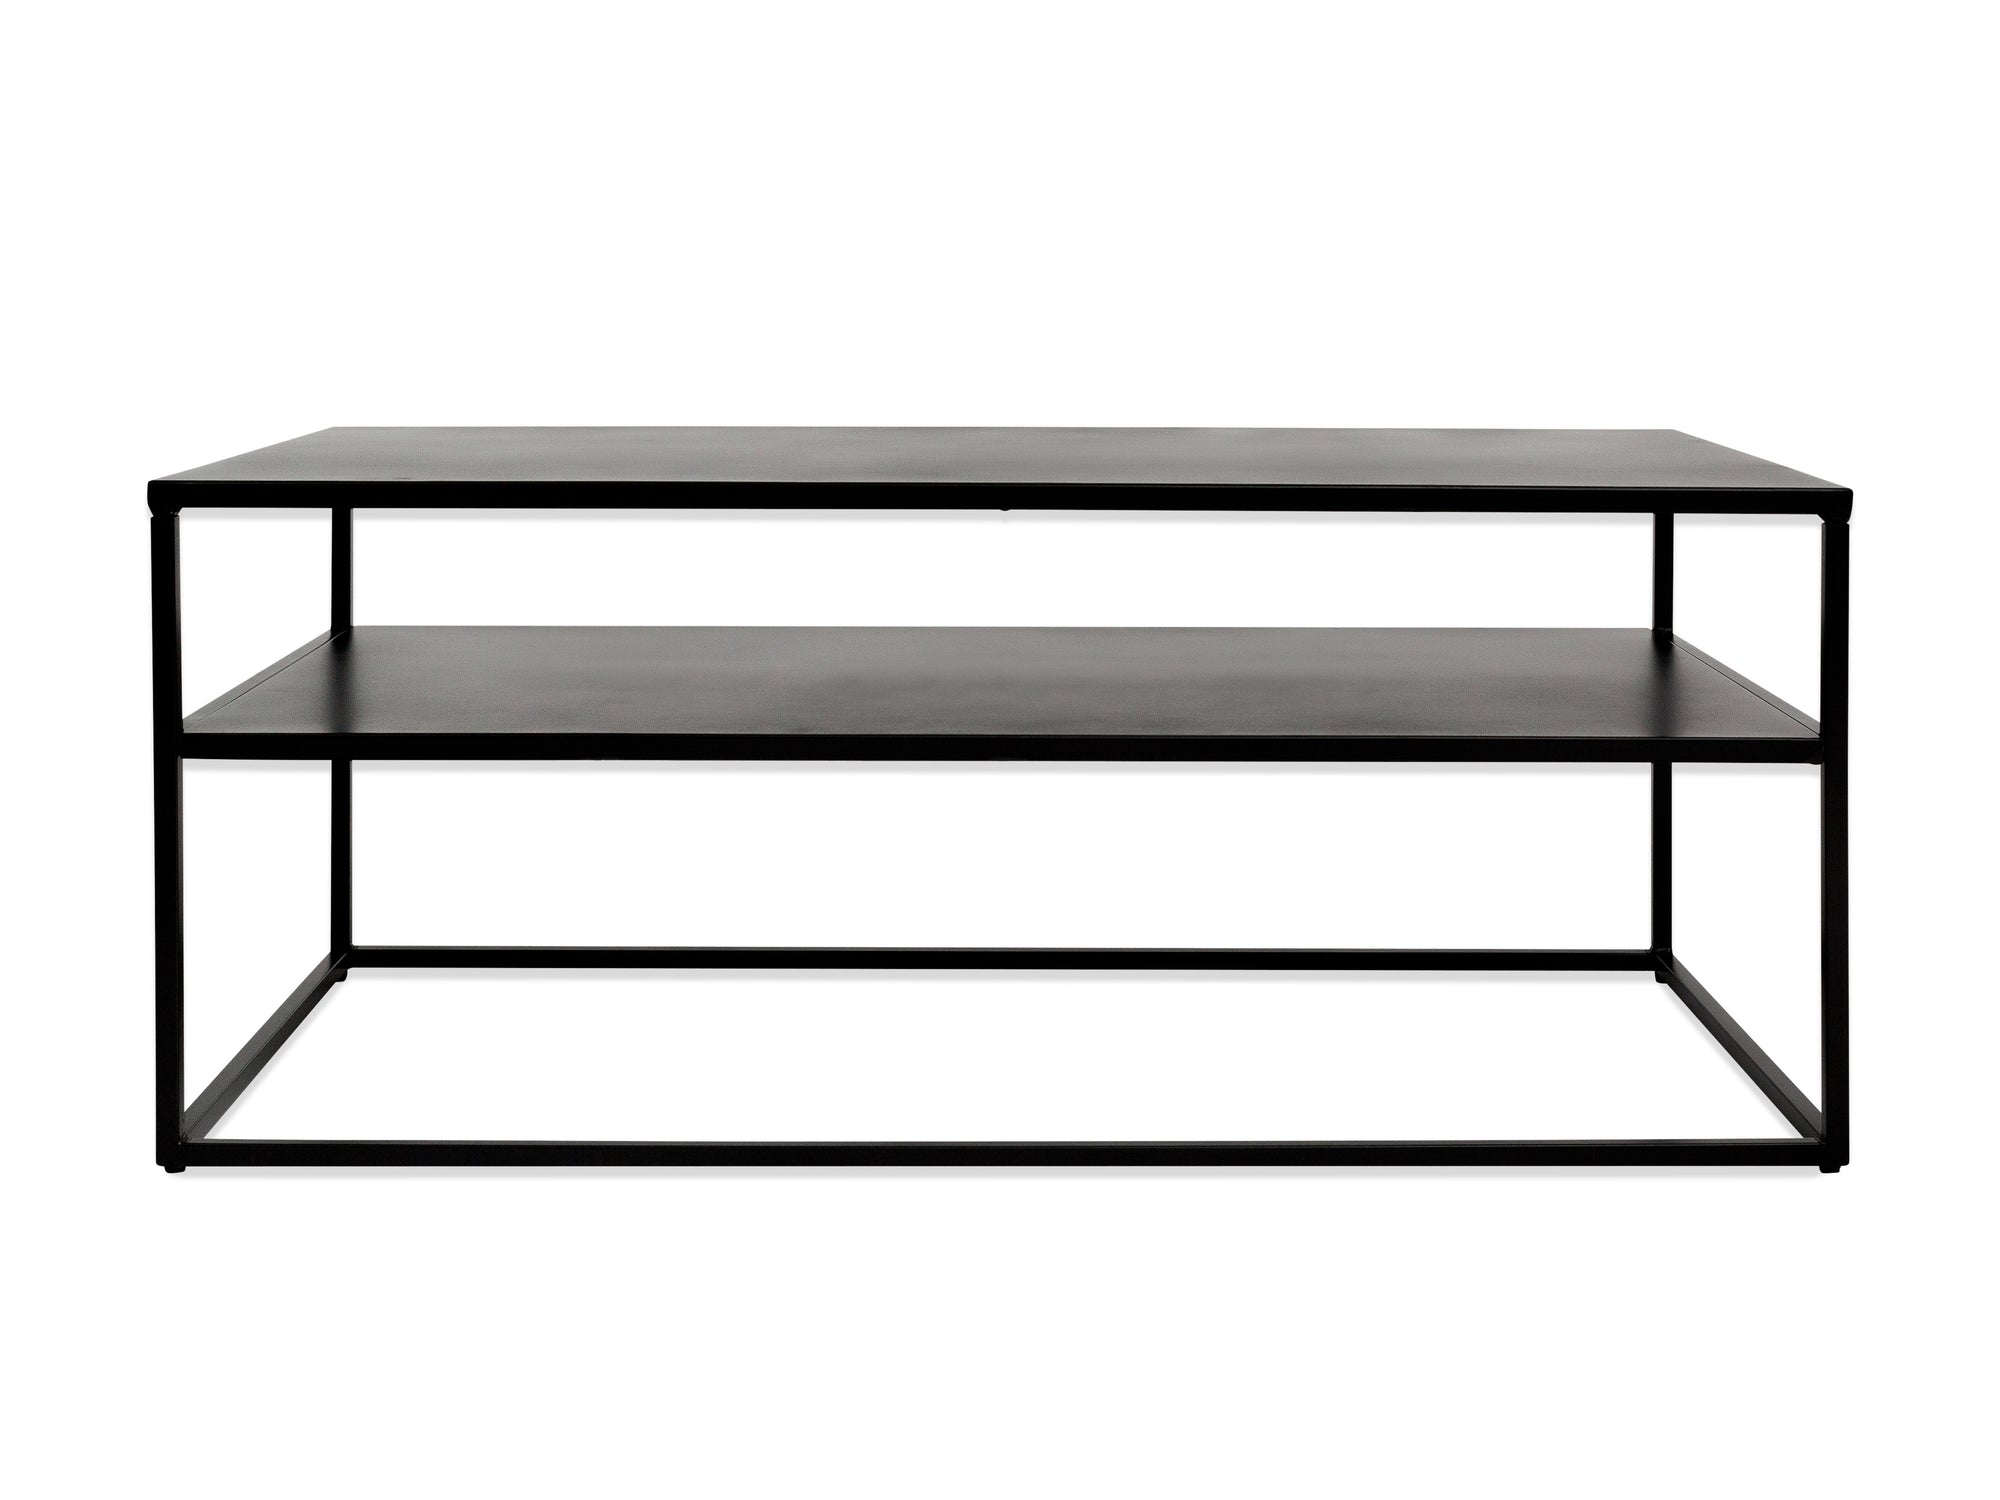 Metal Shelf Table - The Everset